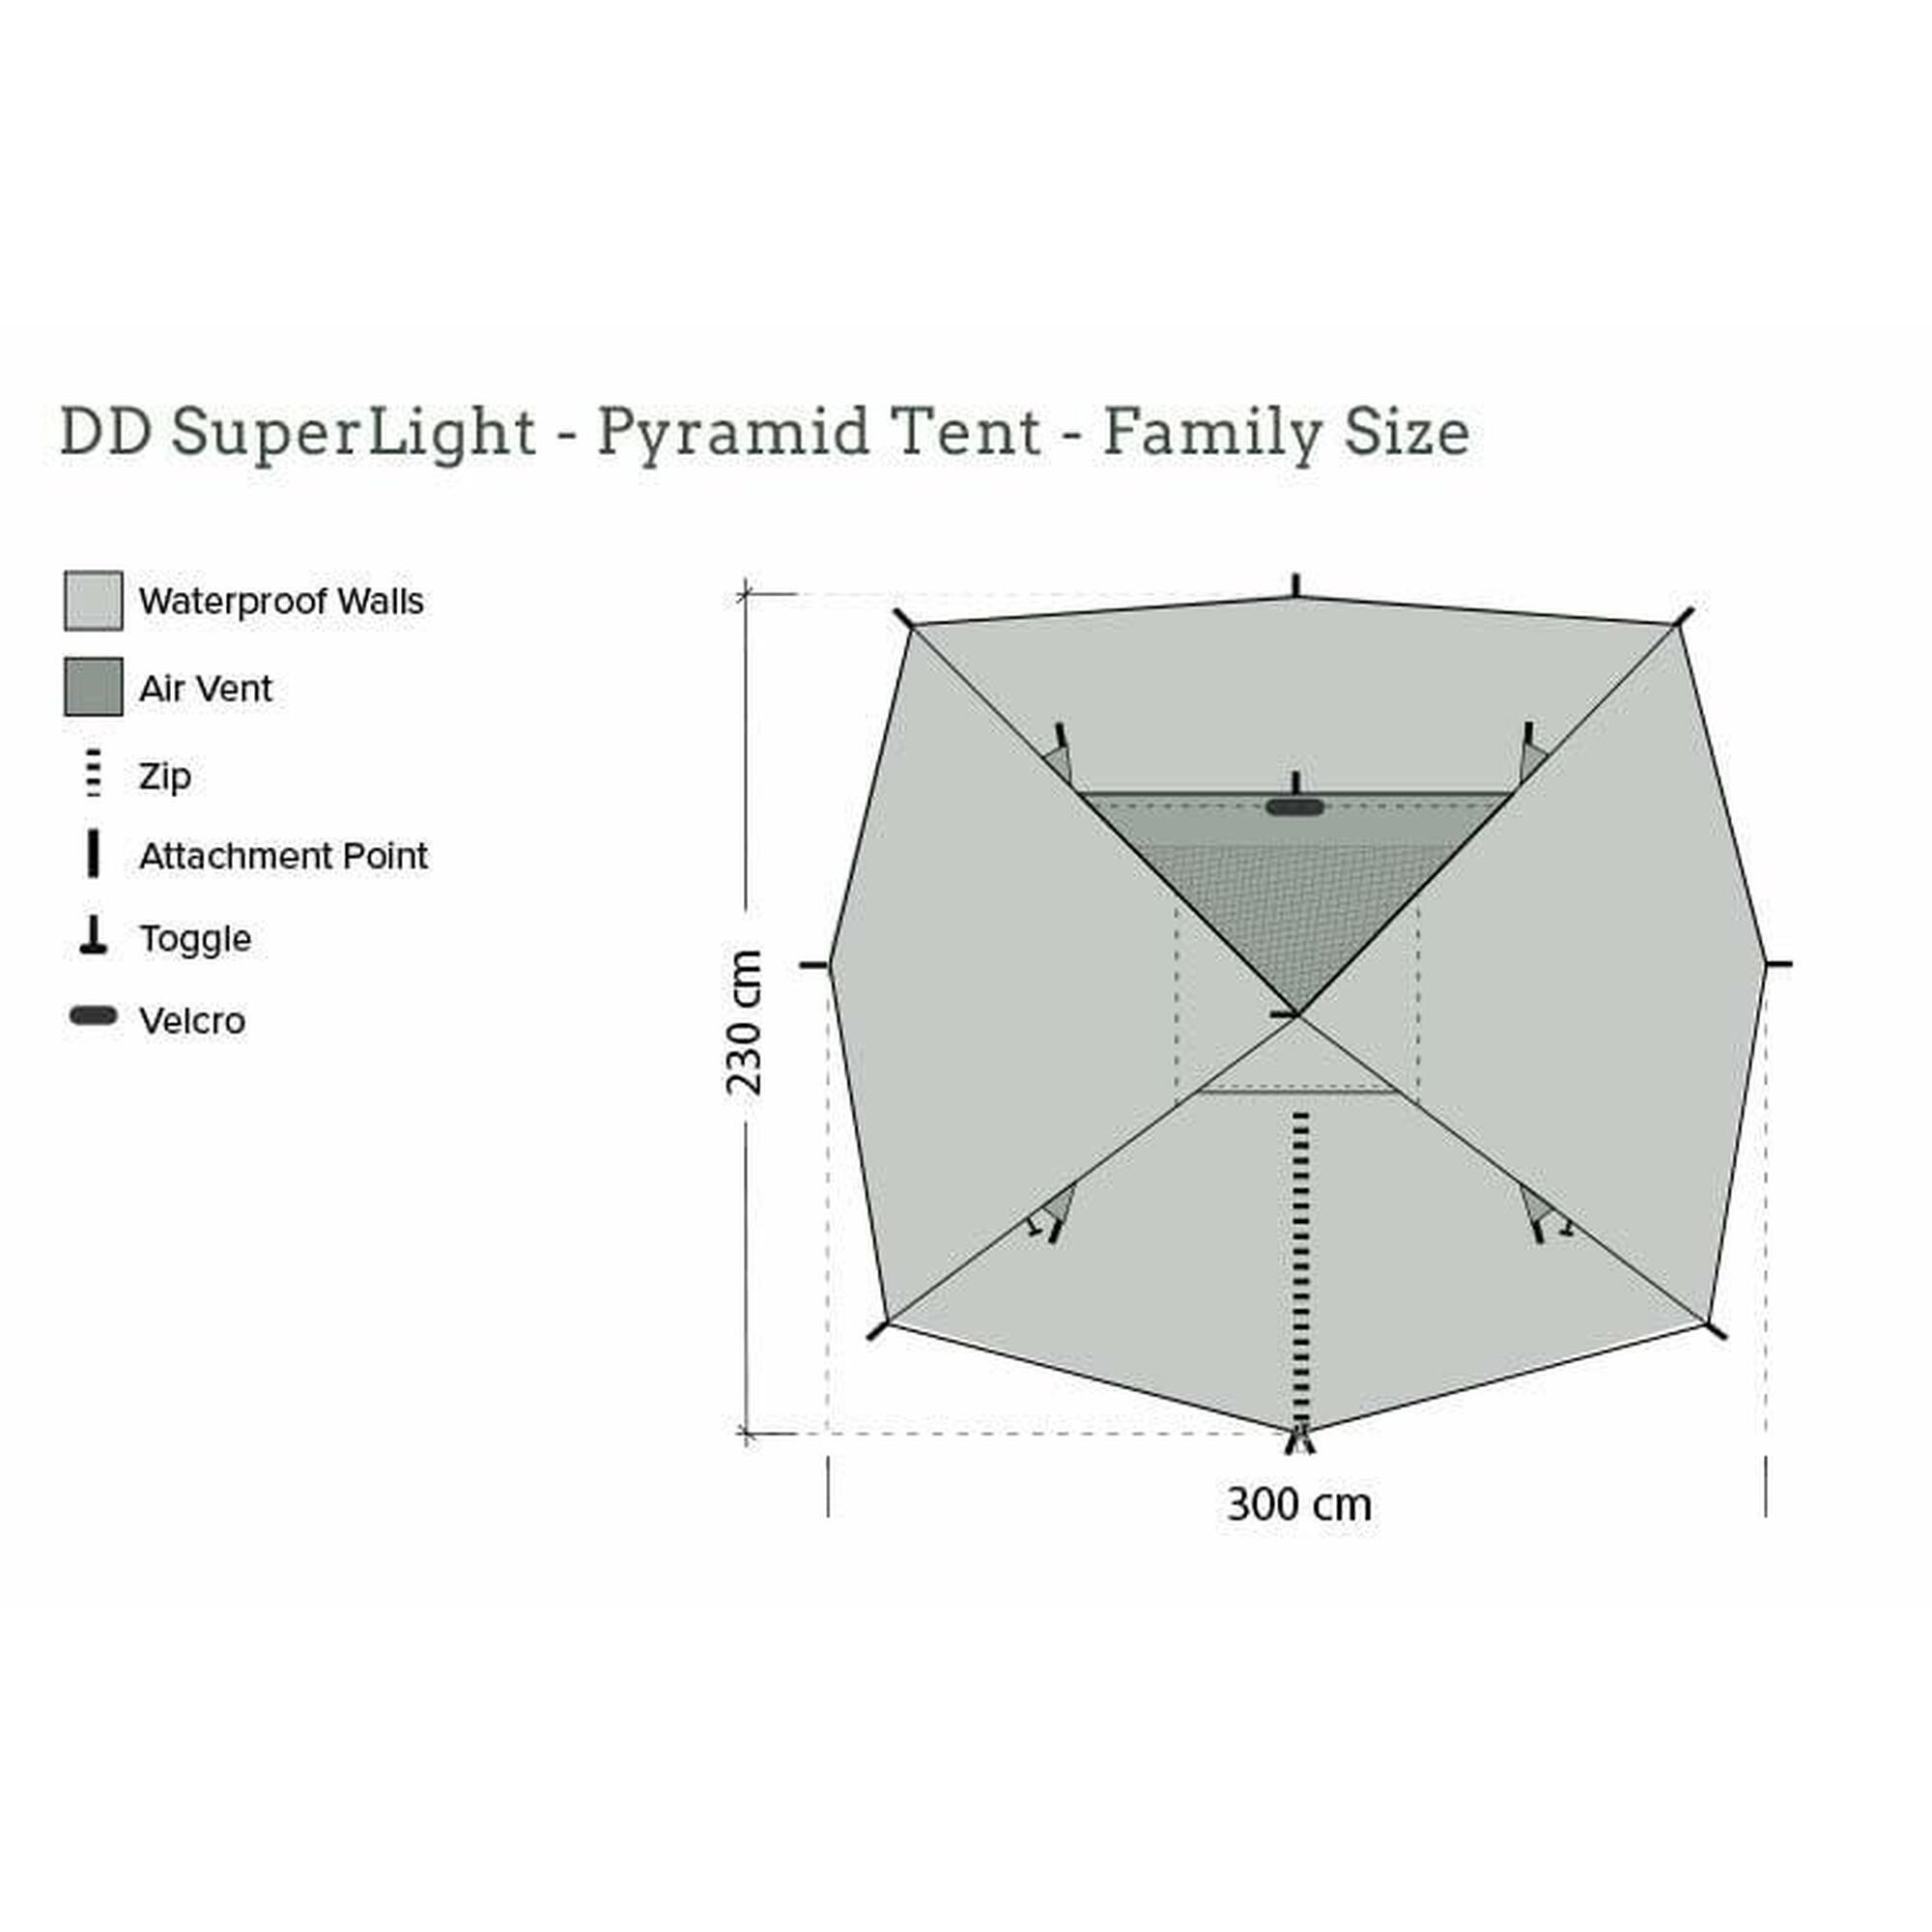 DD Hammocks Tente Pyramidale SuperLight - Taille Familiale